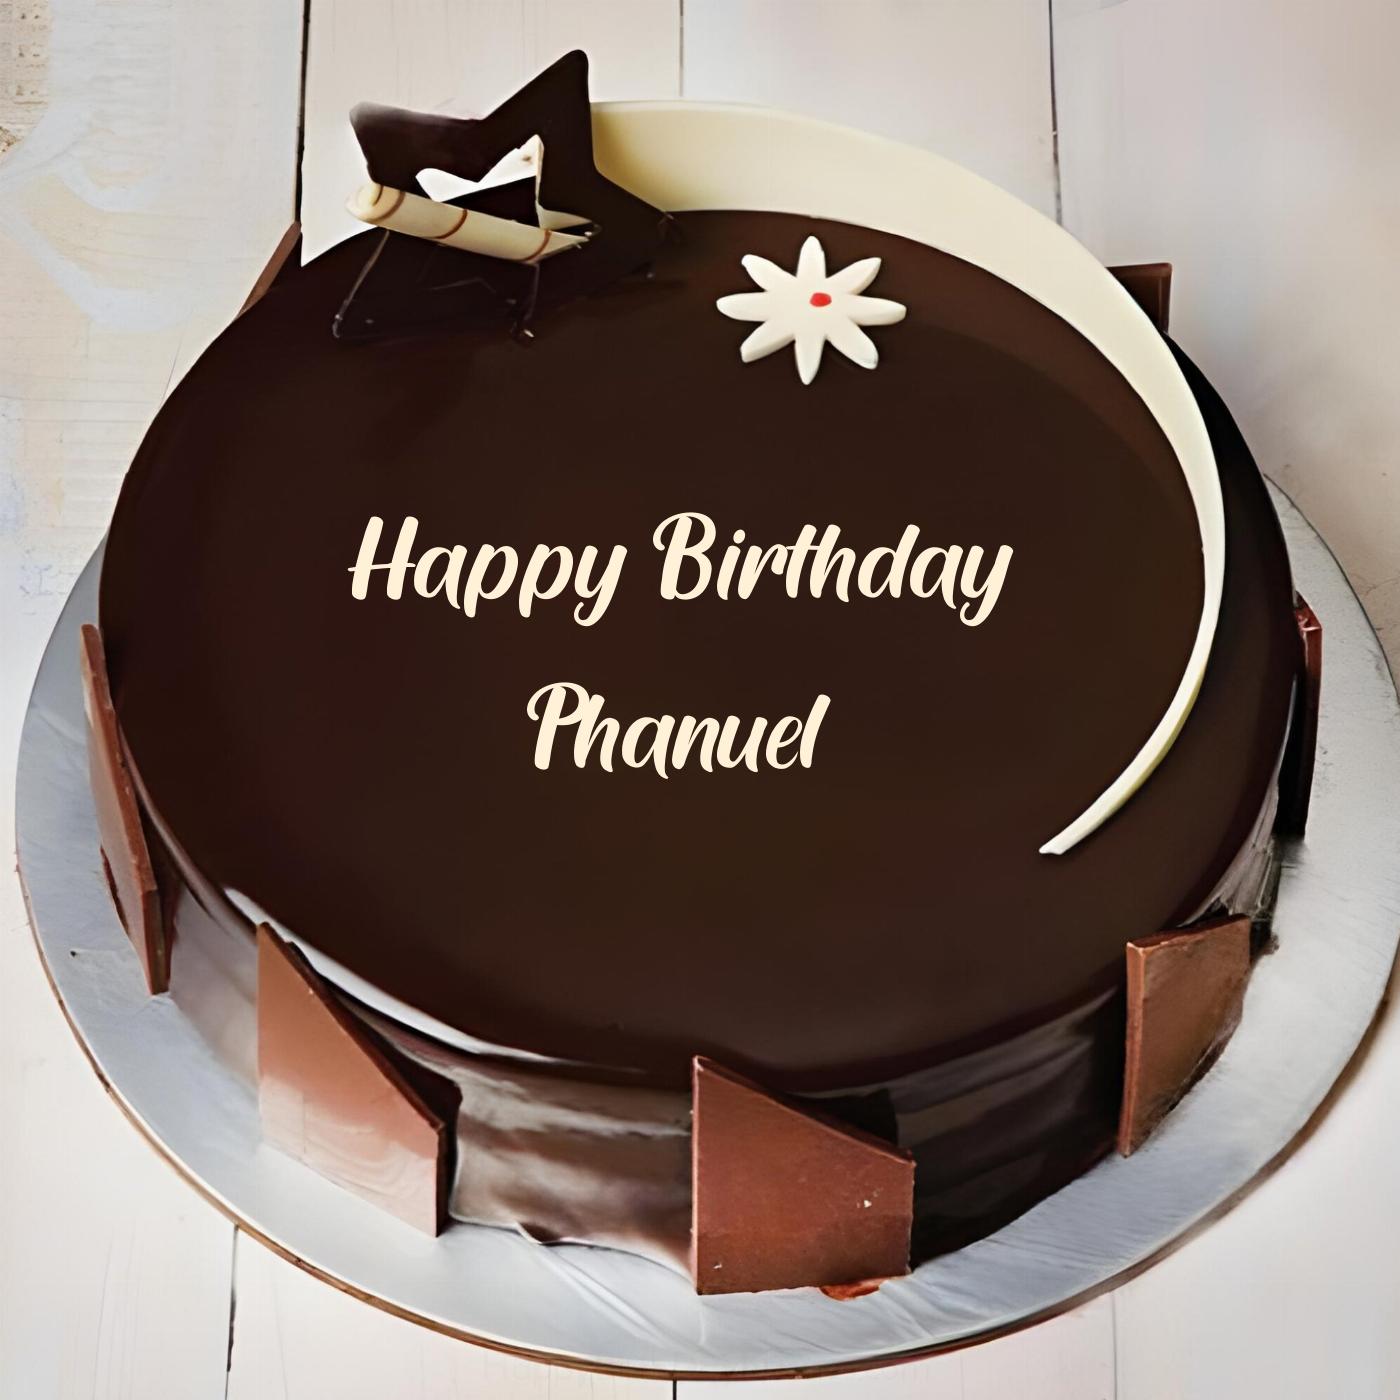 Happy Birthday Phanuel Chocolate Star Cake